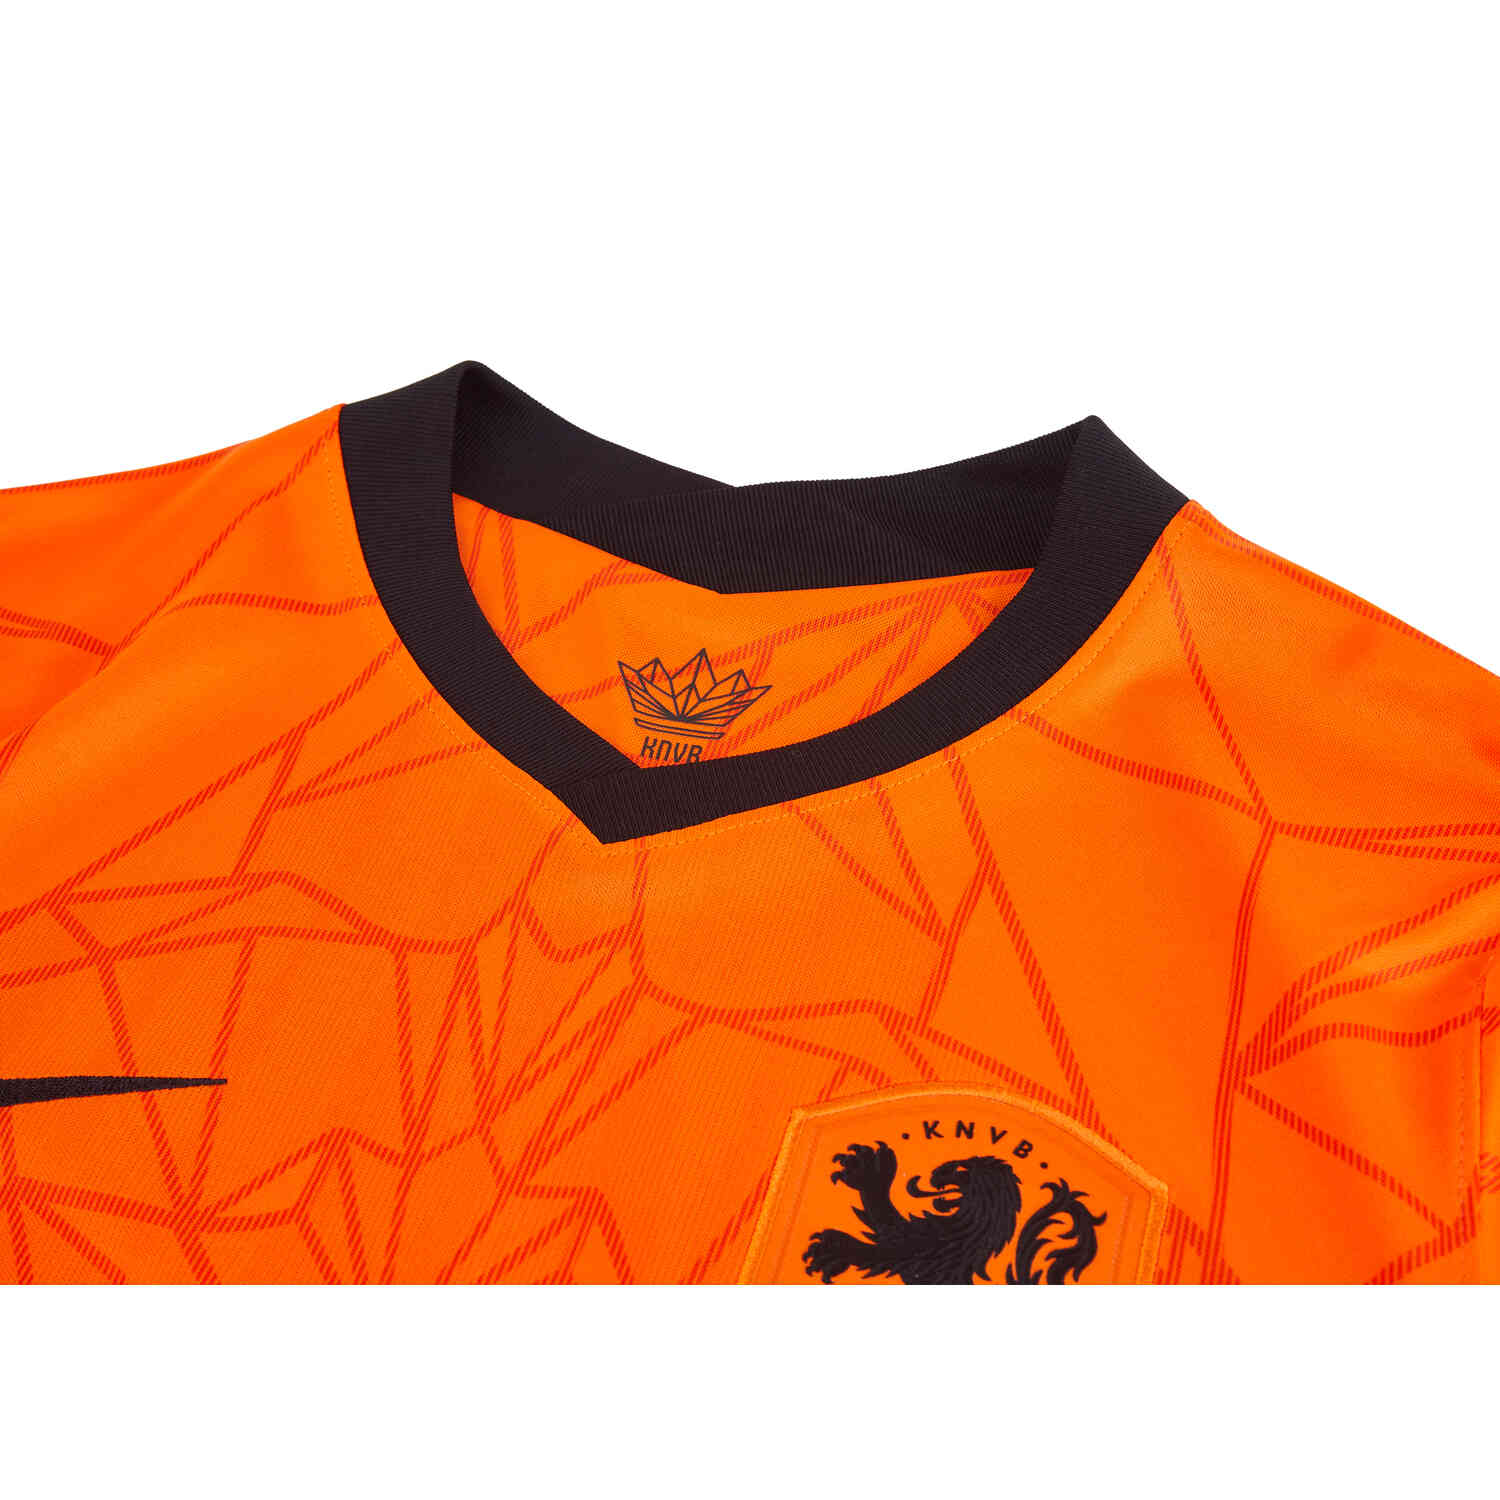 DHGATE FAKE Cheap Nike football shirt Holland🇳🇱Virgil Van Dijk